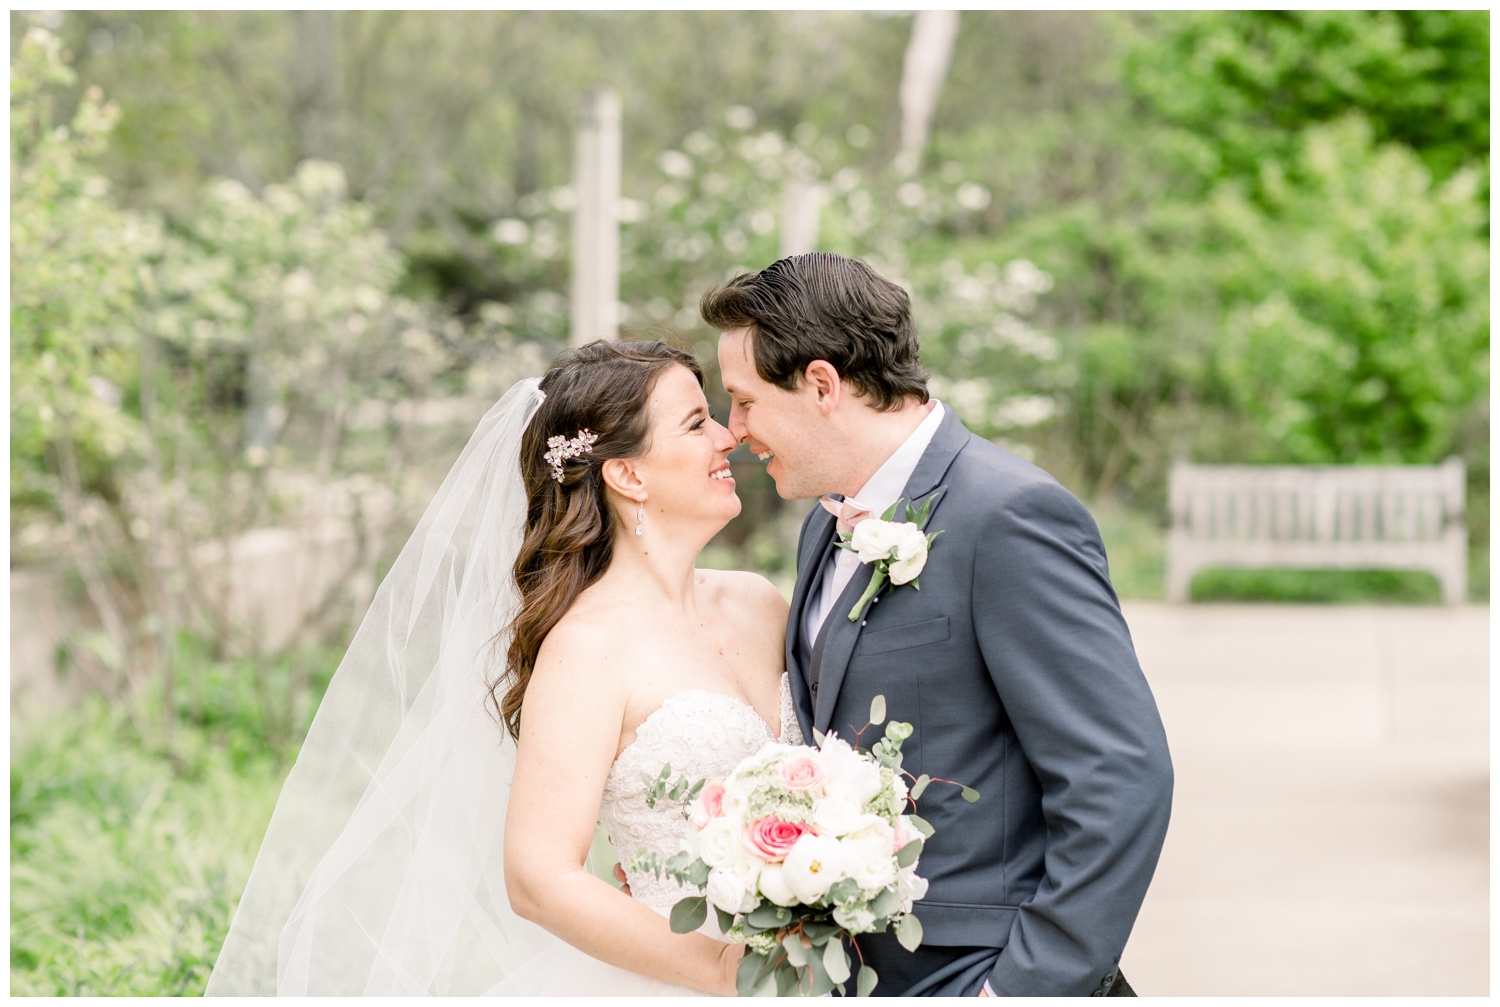 Bride and Groom at Ault Park Gardens - Cincinnati Wedding Photographer